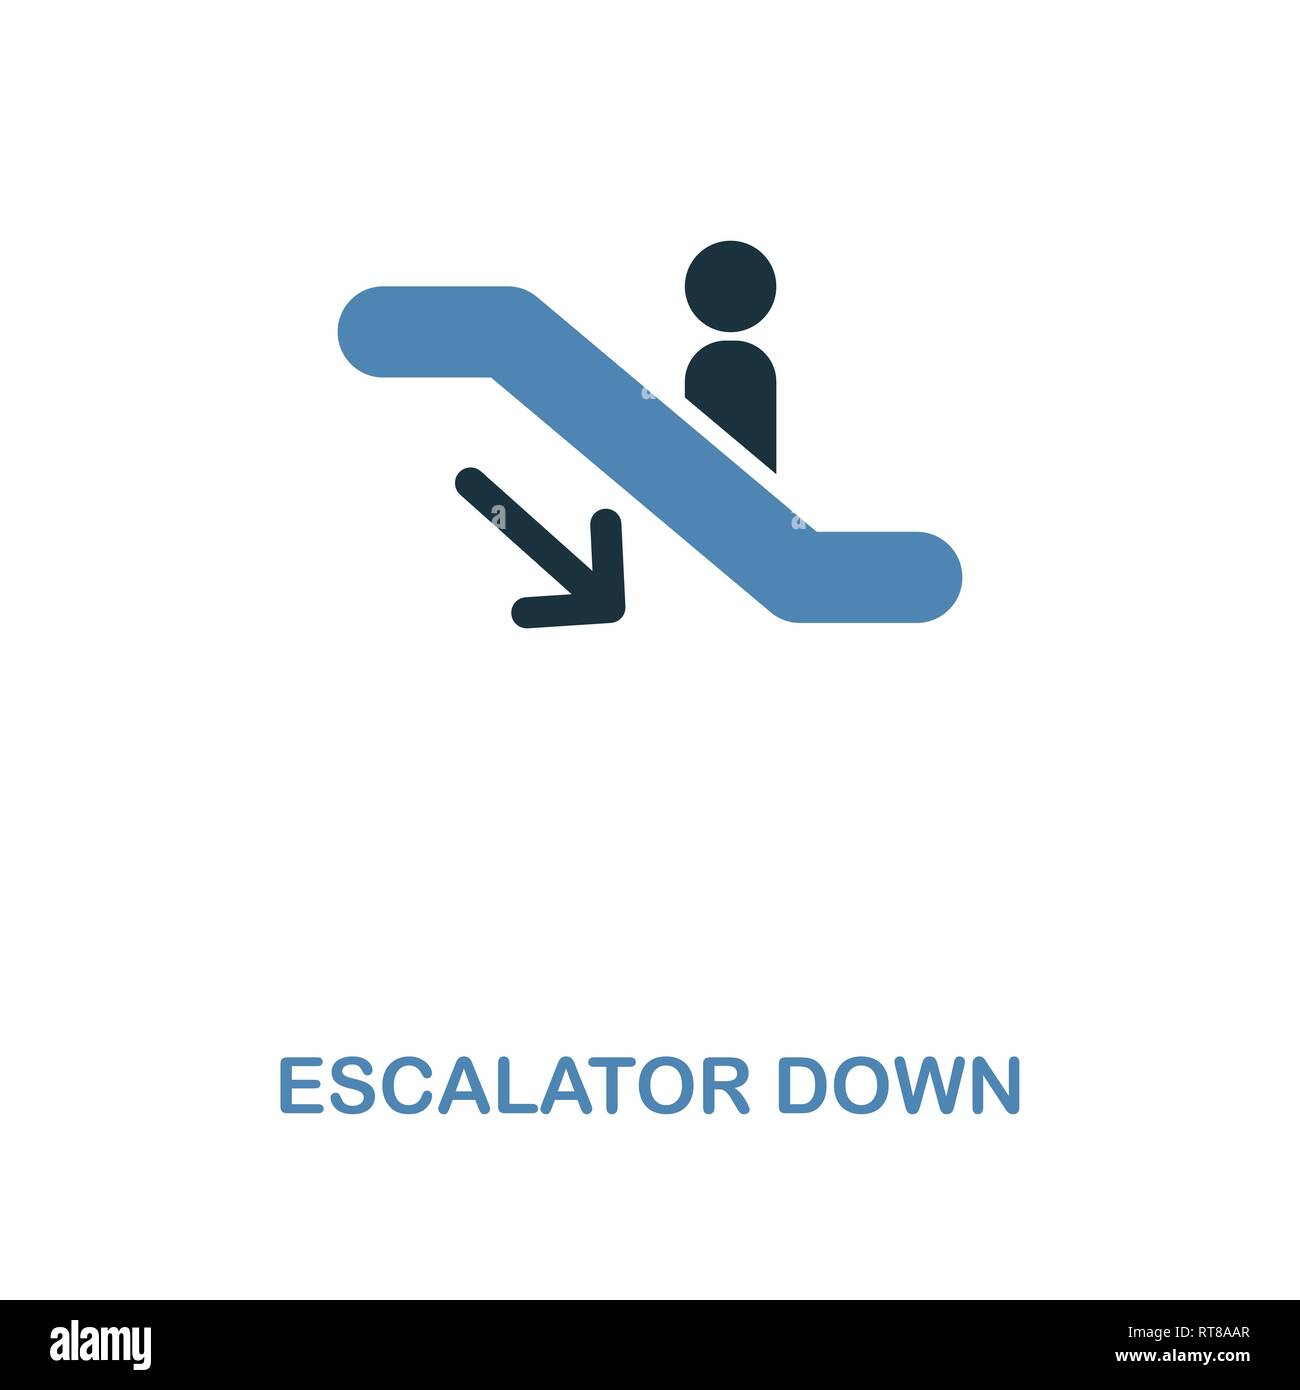 Escalator Down icon. Monochrome style design from shopping center sign icon collection. UI. Pixel perfect simple pictogram escalator down icon. Web Stock Vector